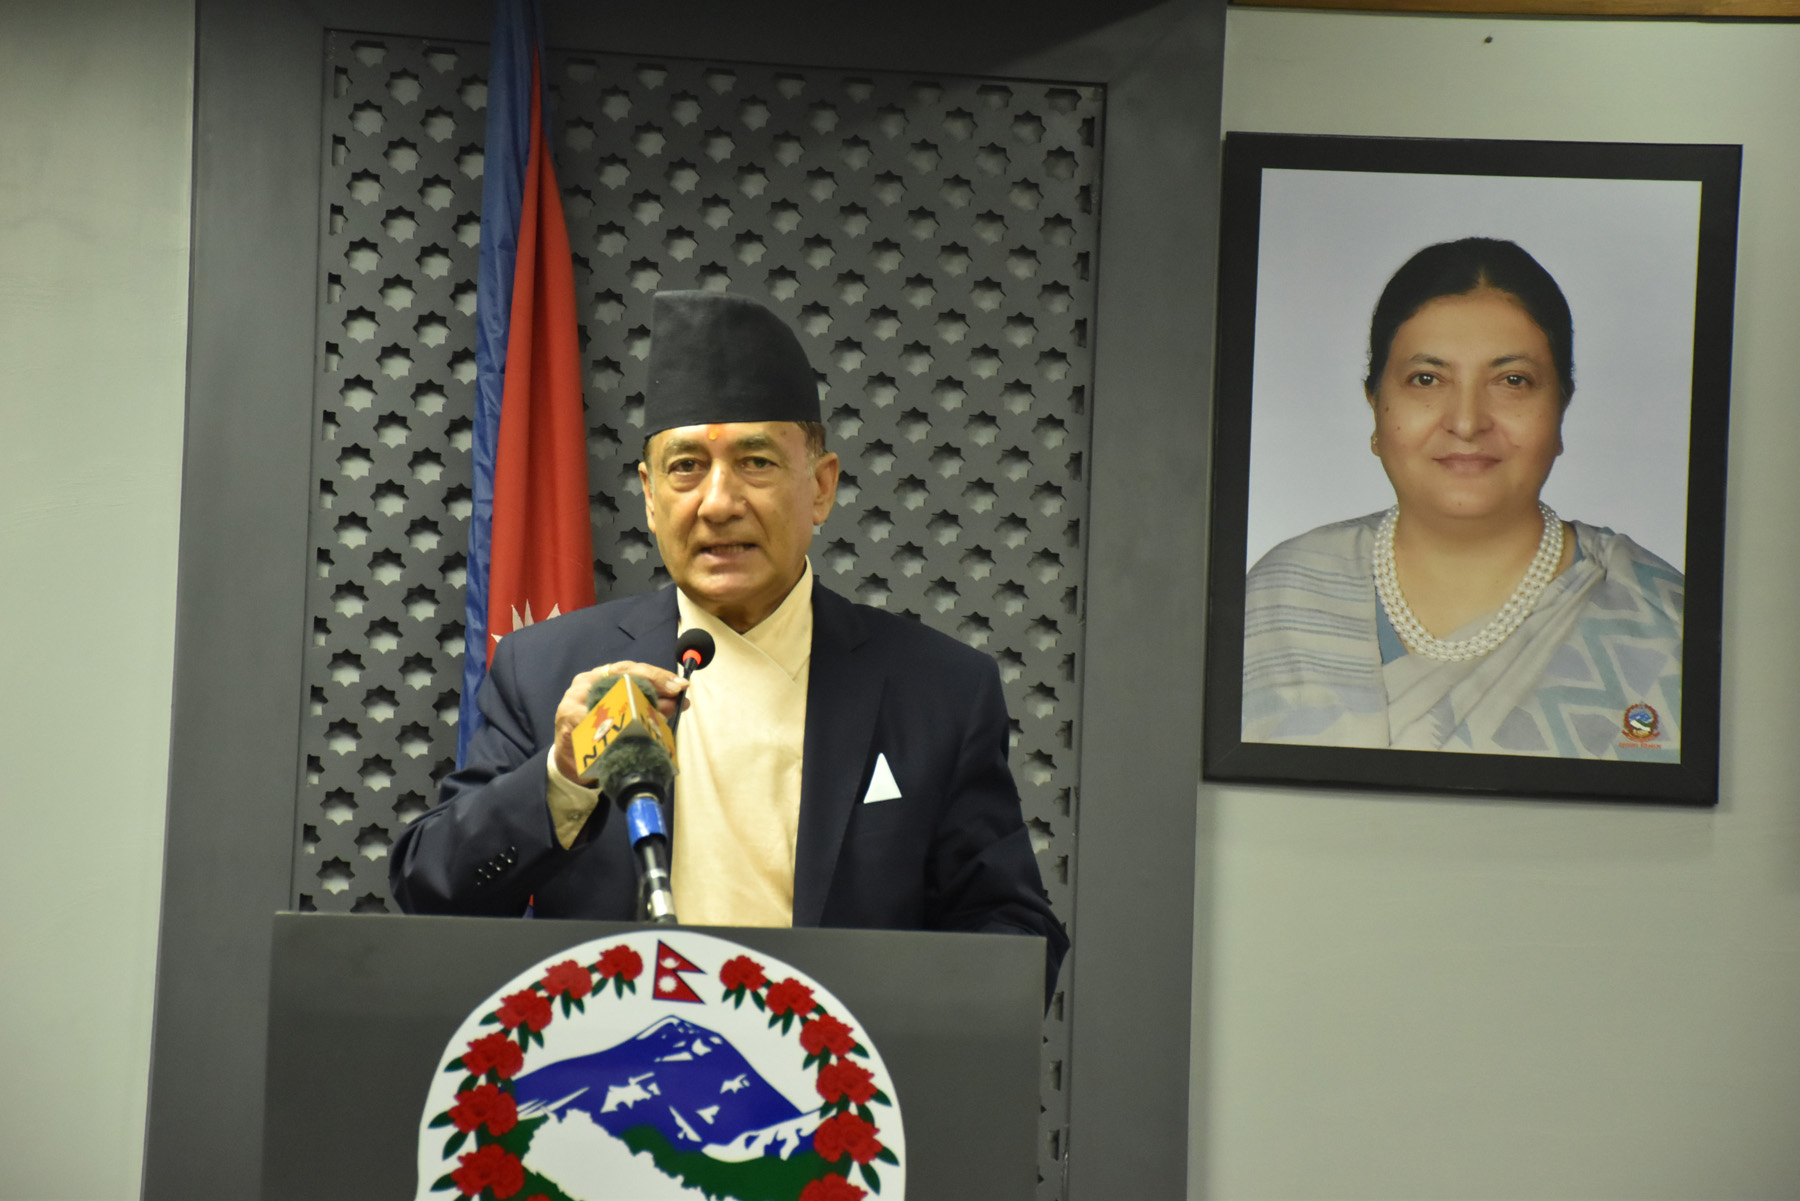 Minister Karki calls for developing Nepal as IT hub